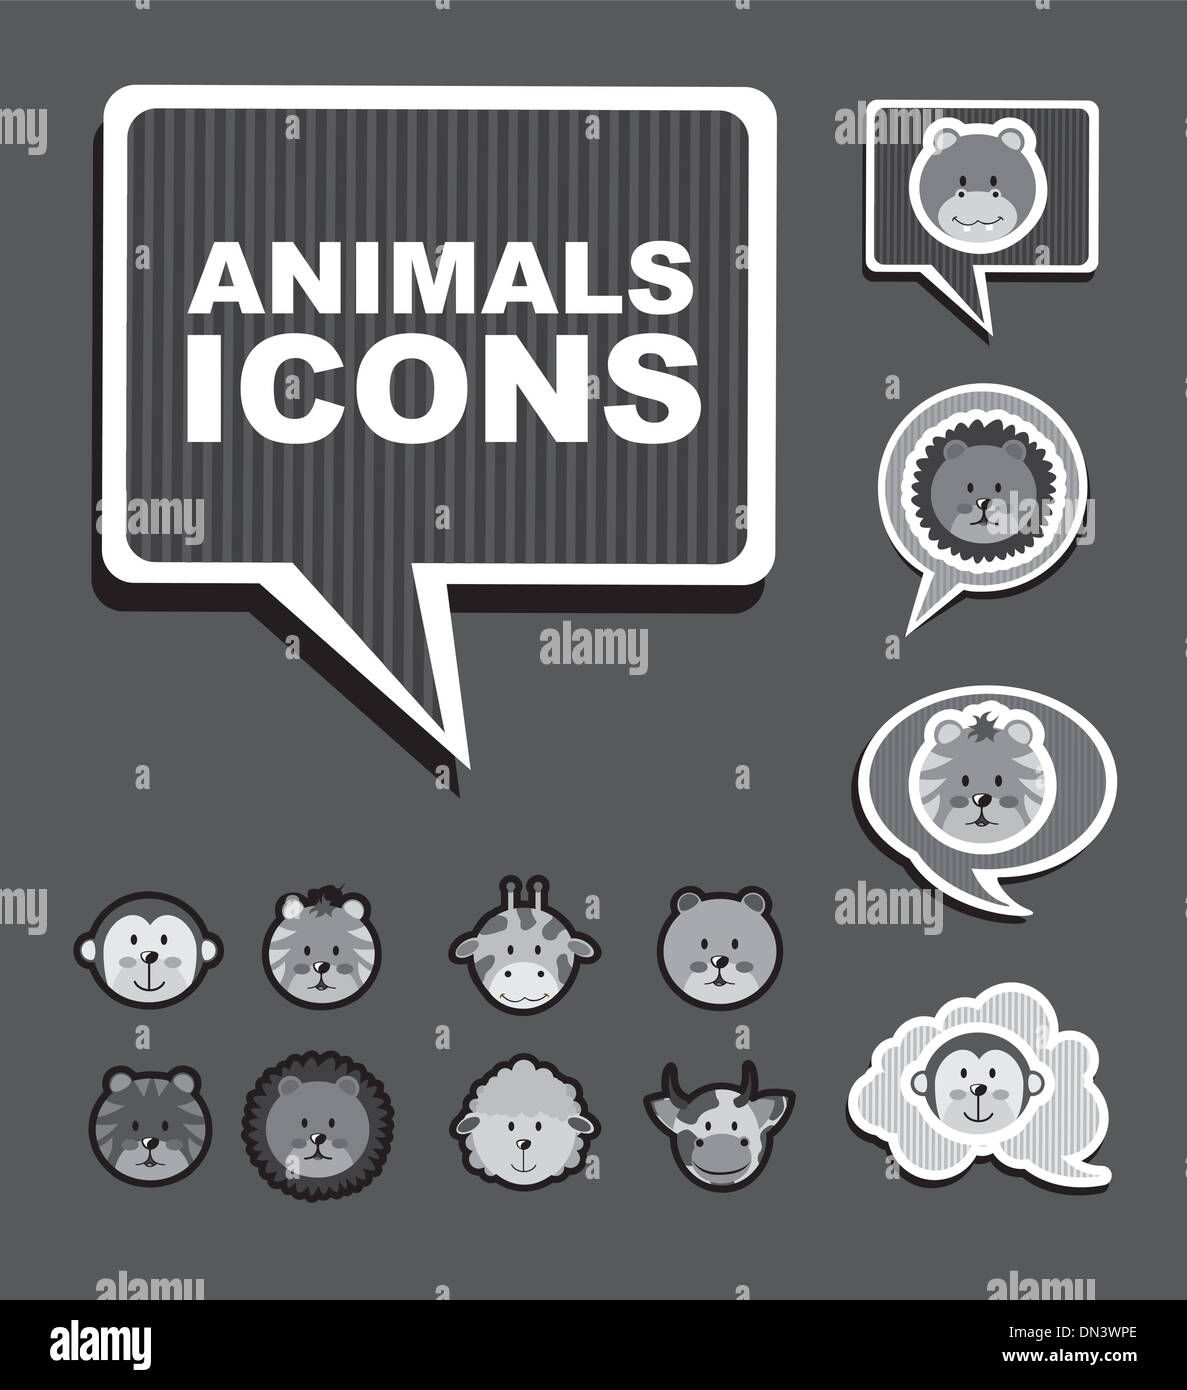 animals icons Stock Vector